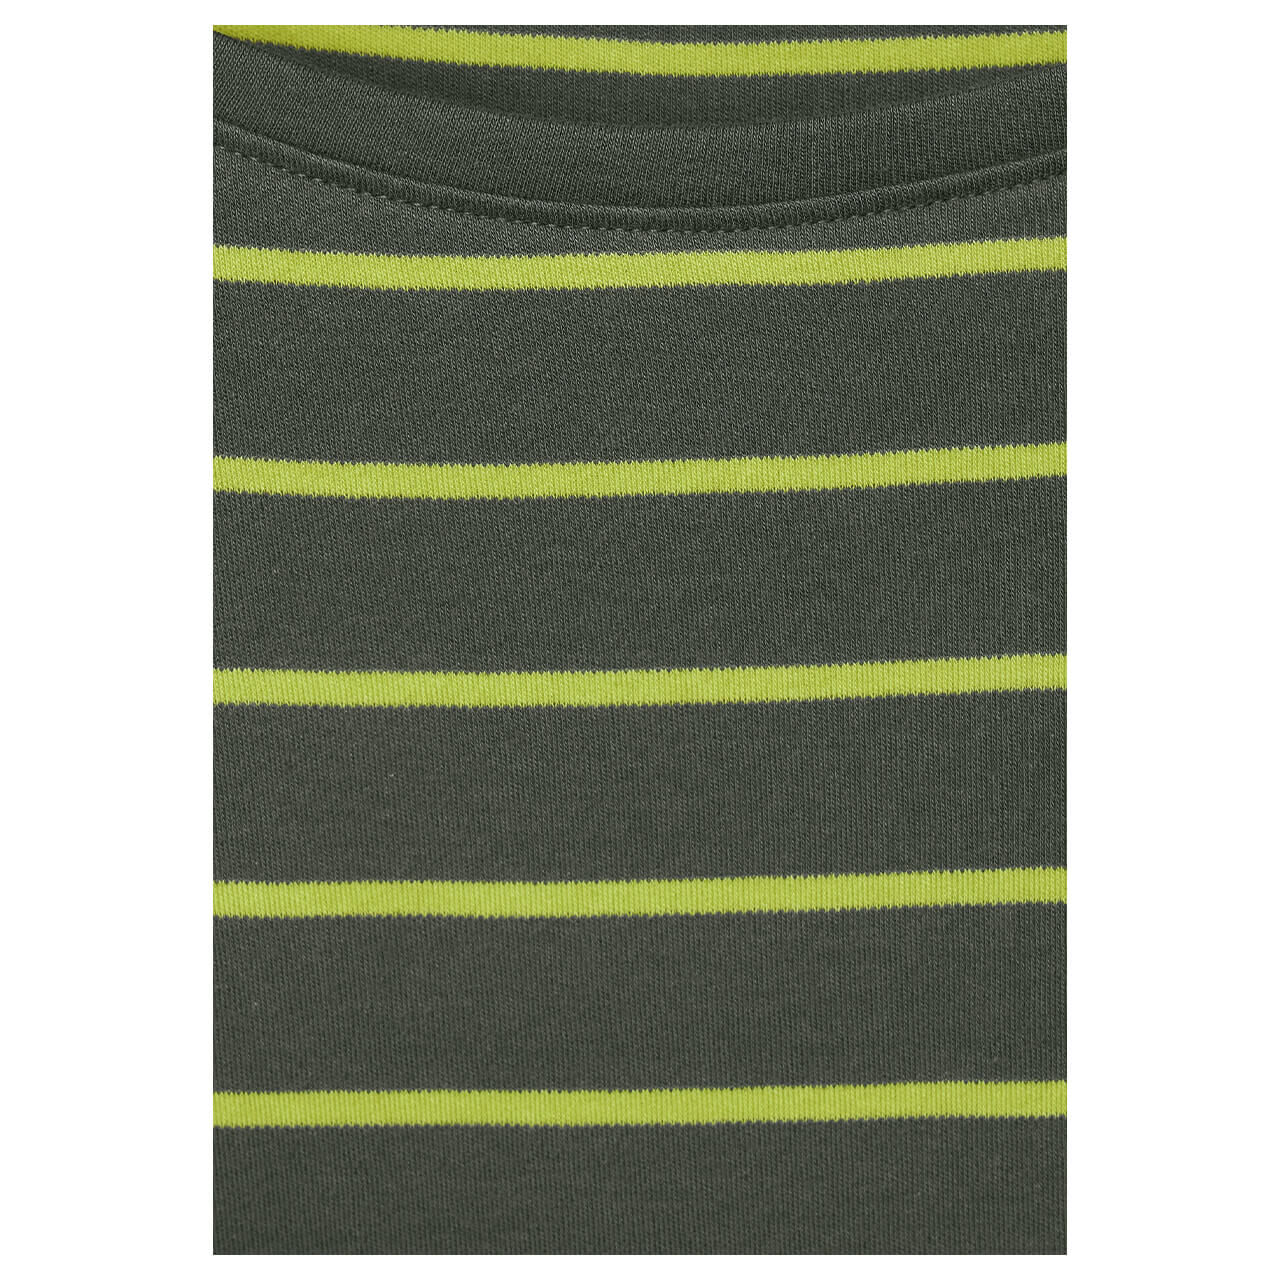 Cecil Damen 3/4 Arm Shirt Basic Boatneck dynamic khaki stripes